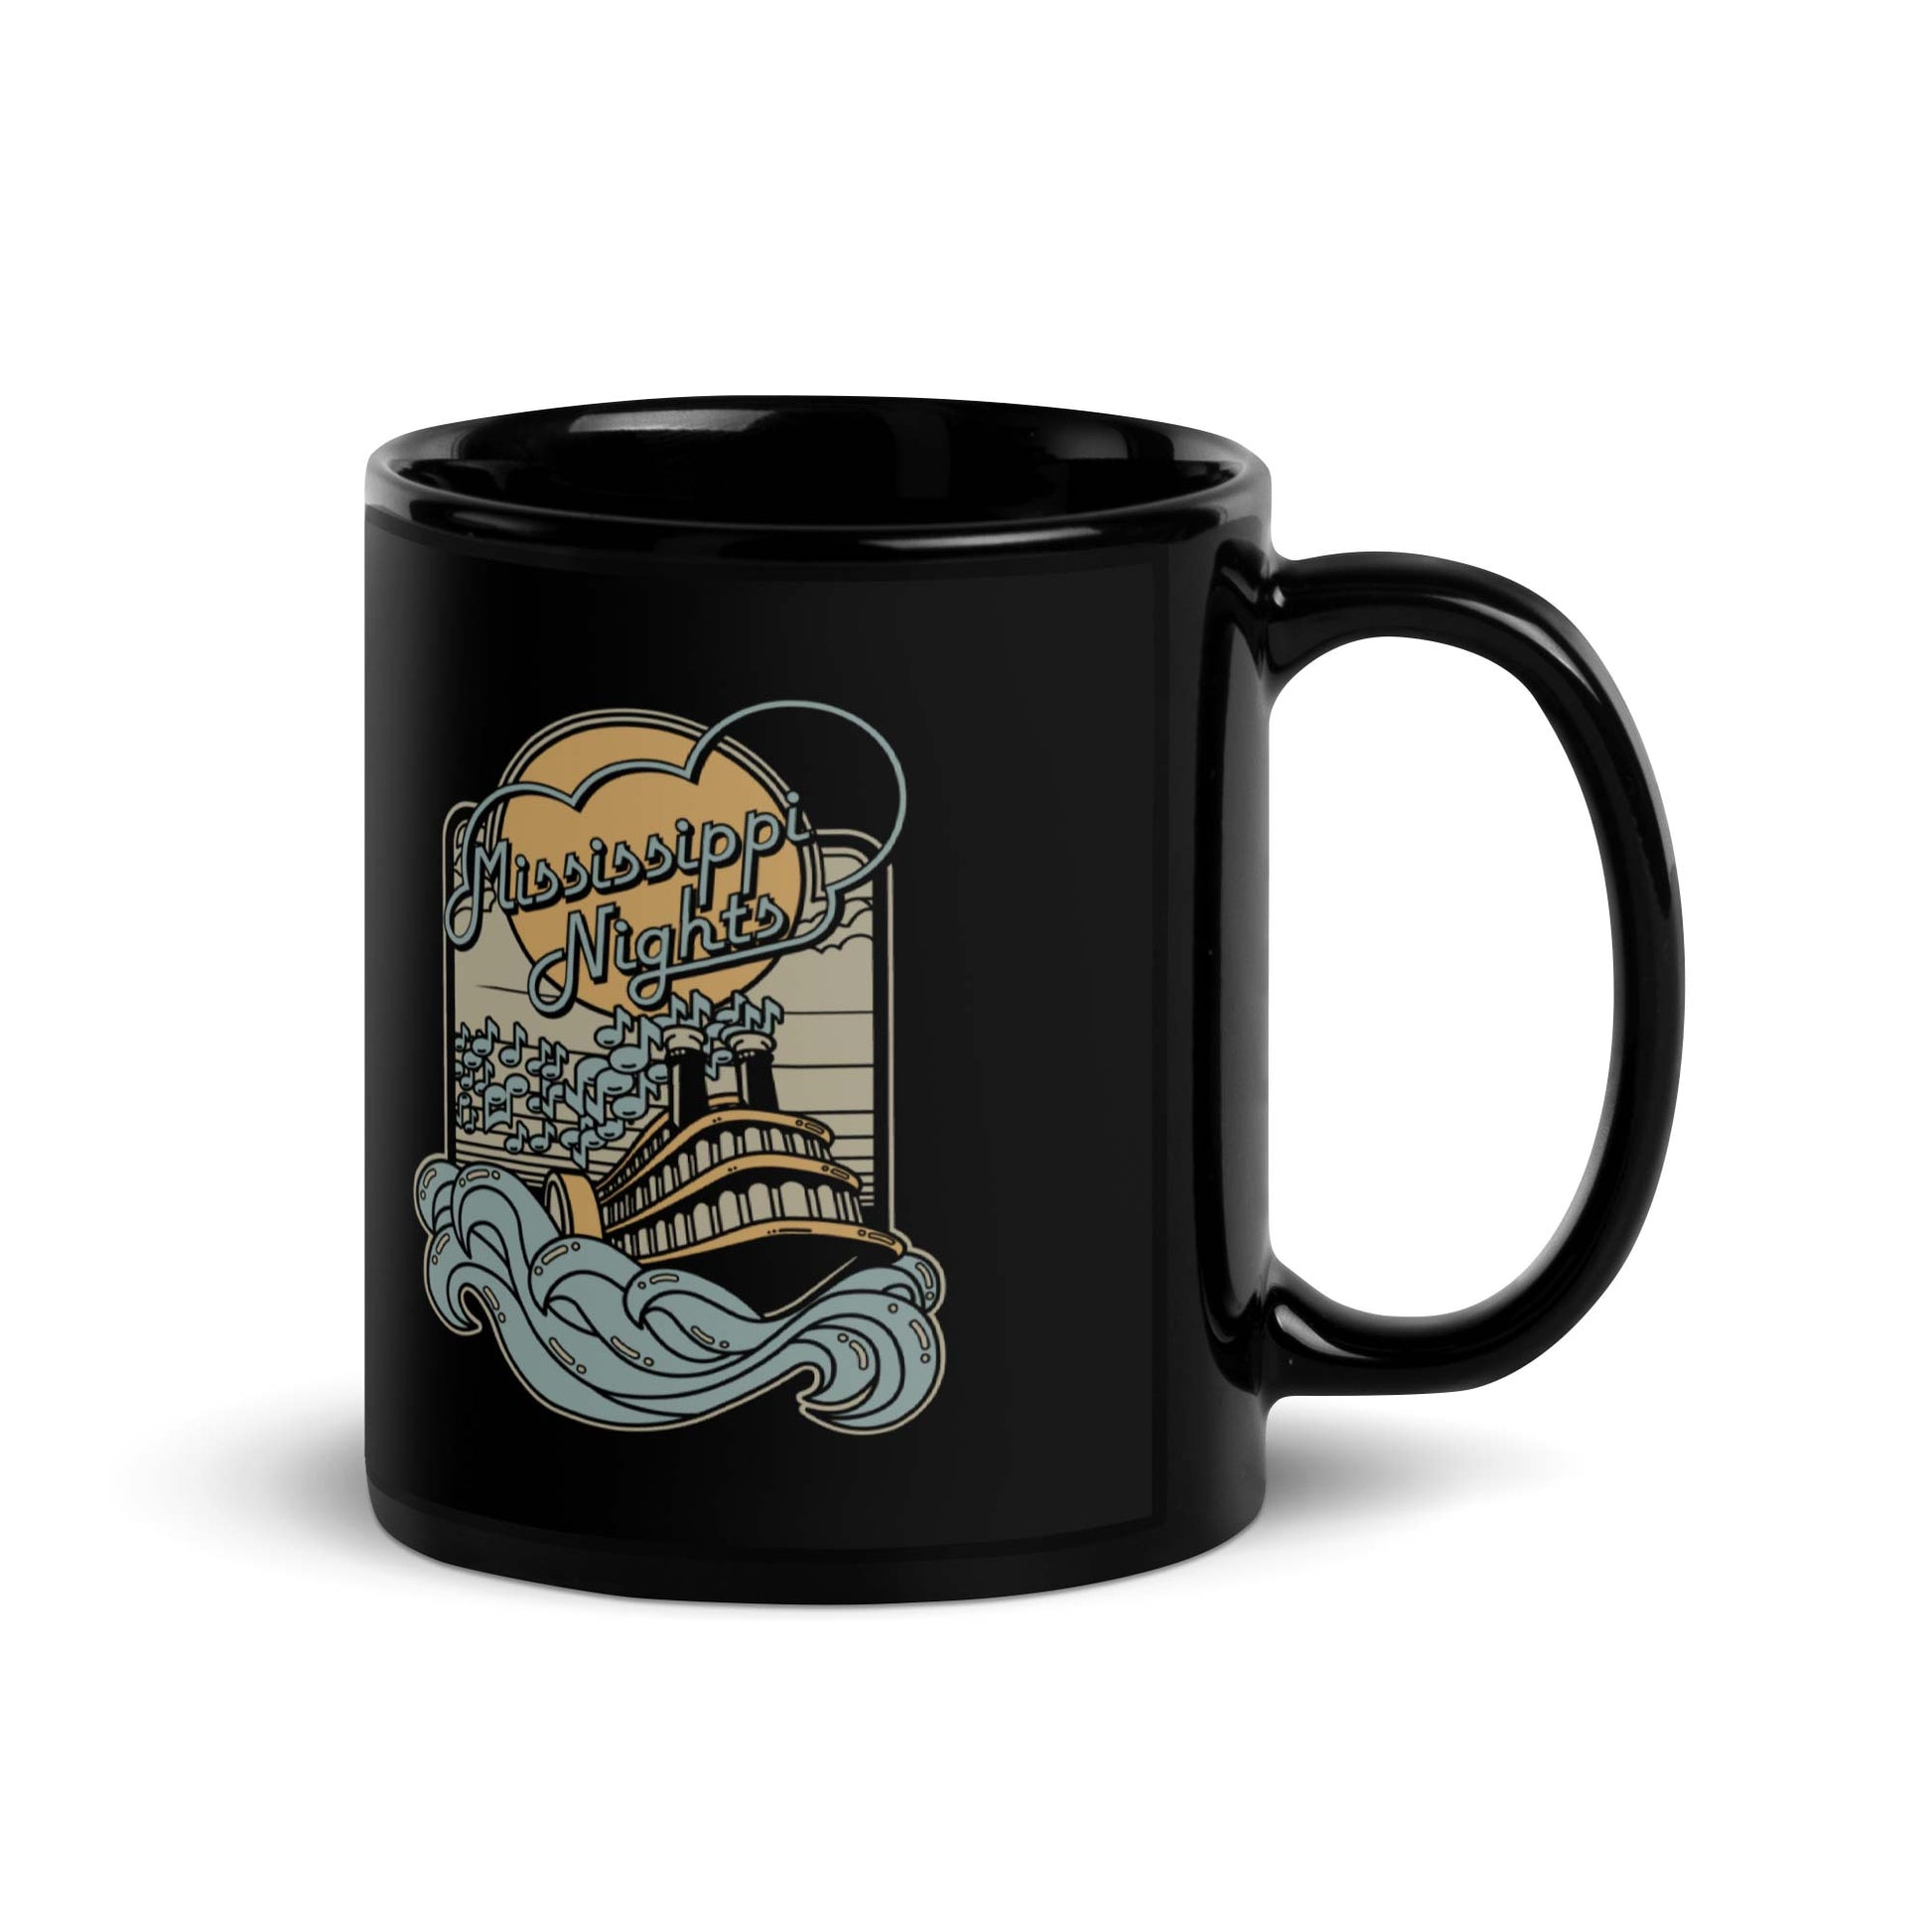 Mississippi Nights St. Louis Black Coffee Mug - Bygone Brand